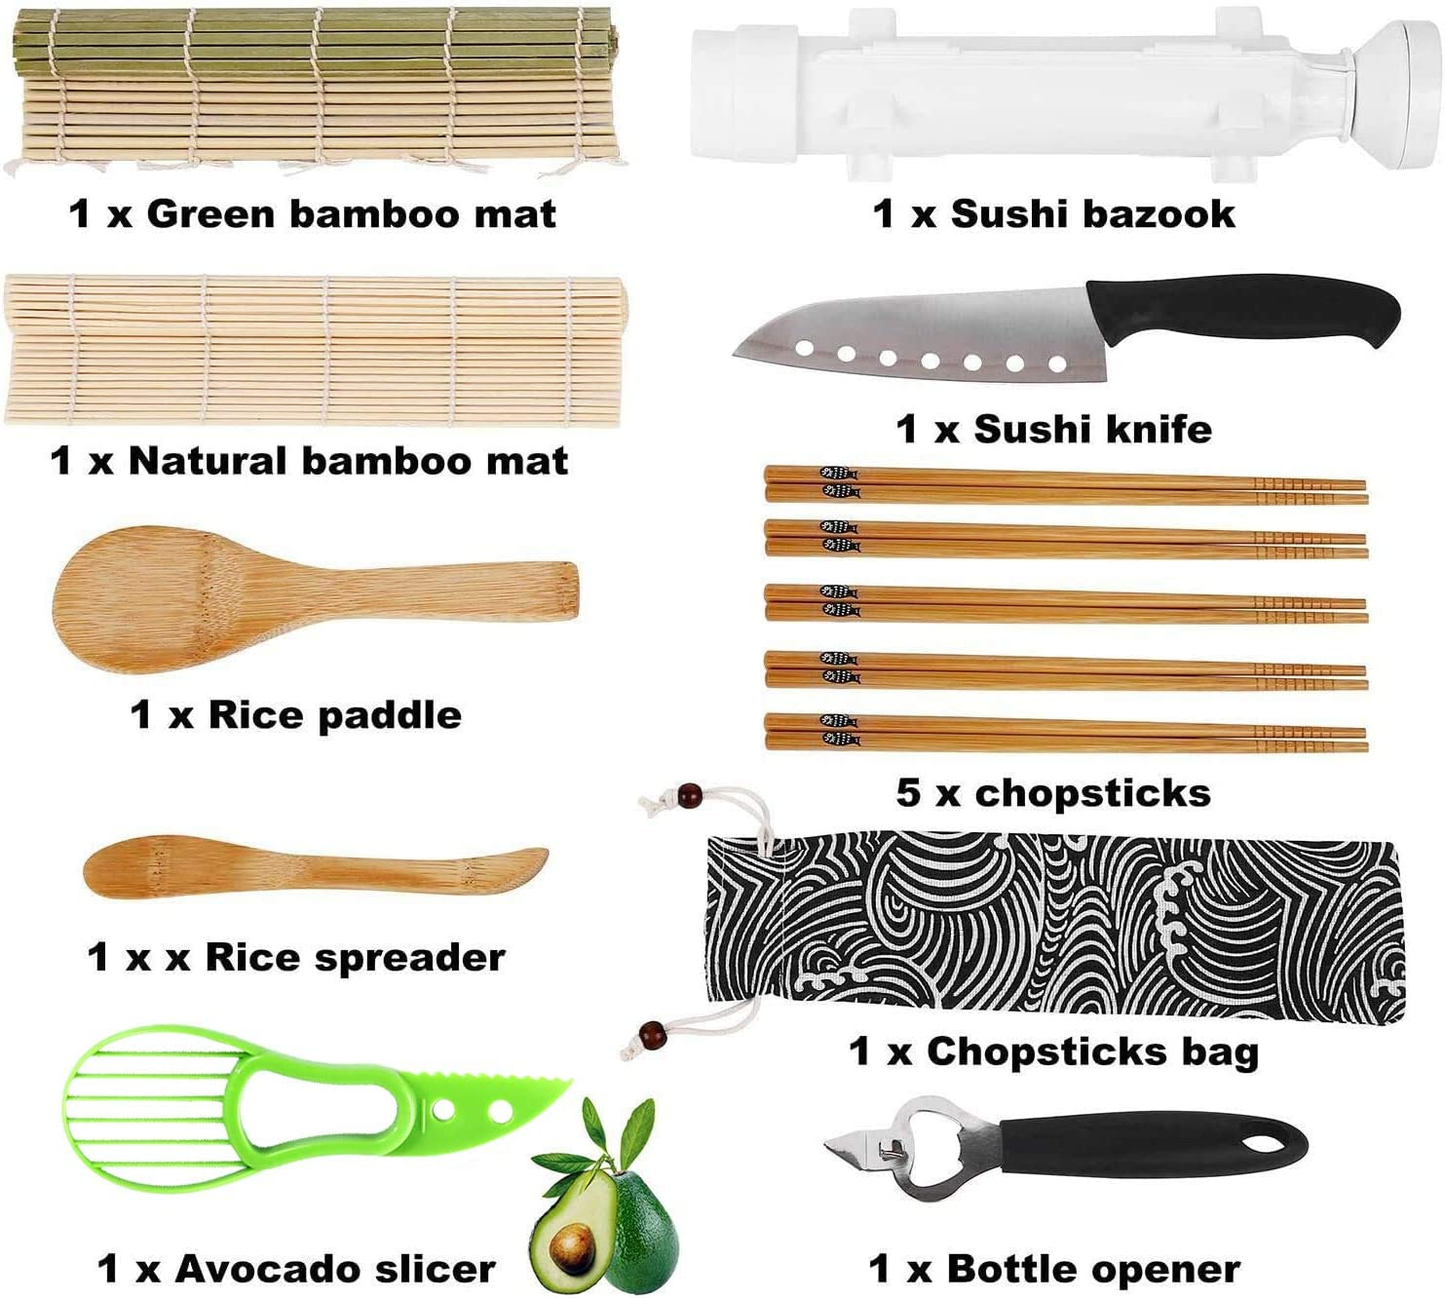 Sushi Making Kit - All in One Sushi Bazooka Maker with Sushi Knife,2 X Bamboo Mats,5 X Bamboo Chopsticks,Avocado Slicer,Paddle,Spreader, Bottle Opener, Cotton Bag - DIY Sushi Roller Machine